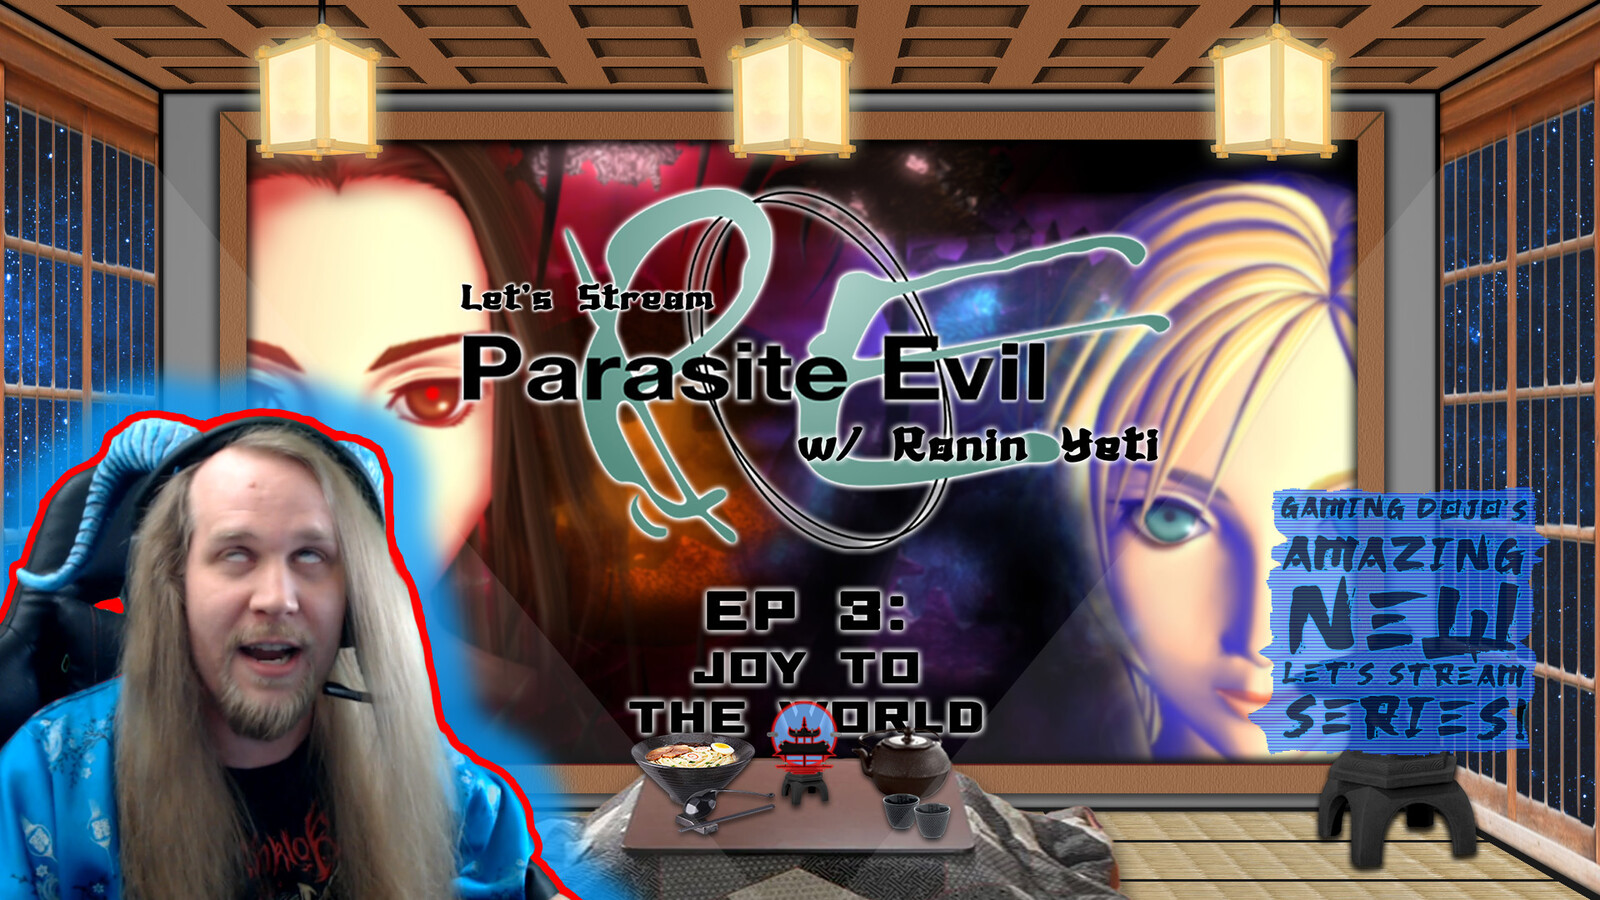 Let's Stream "Parasite Evil" Episode 3 Image | Ronin Yeti Twitch Streaming